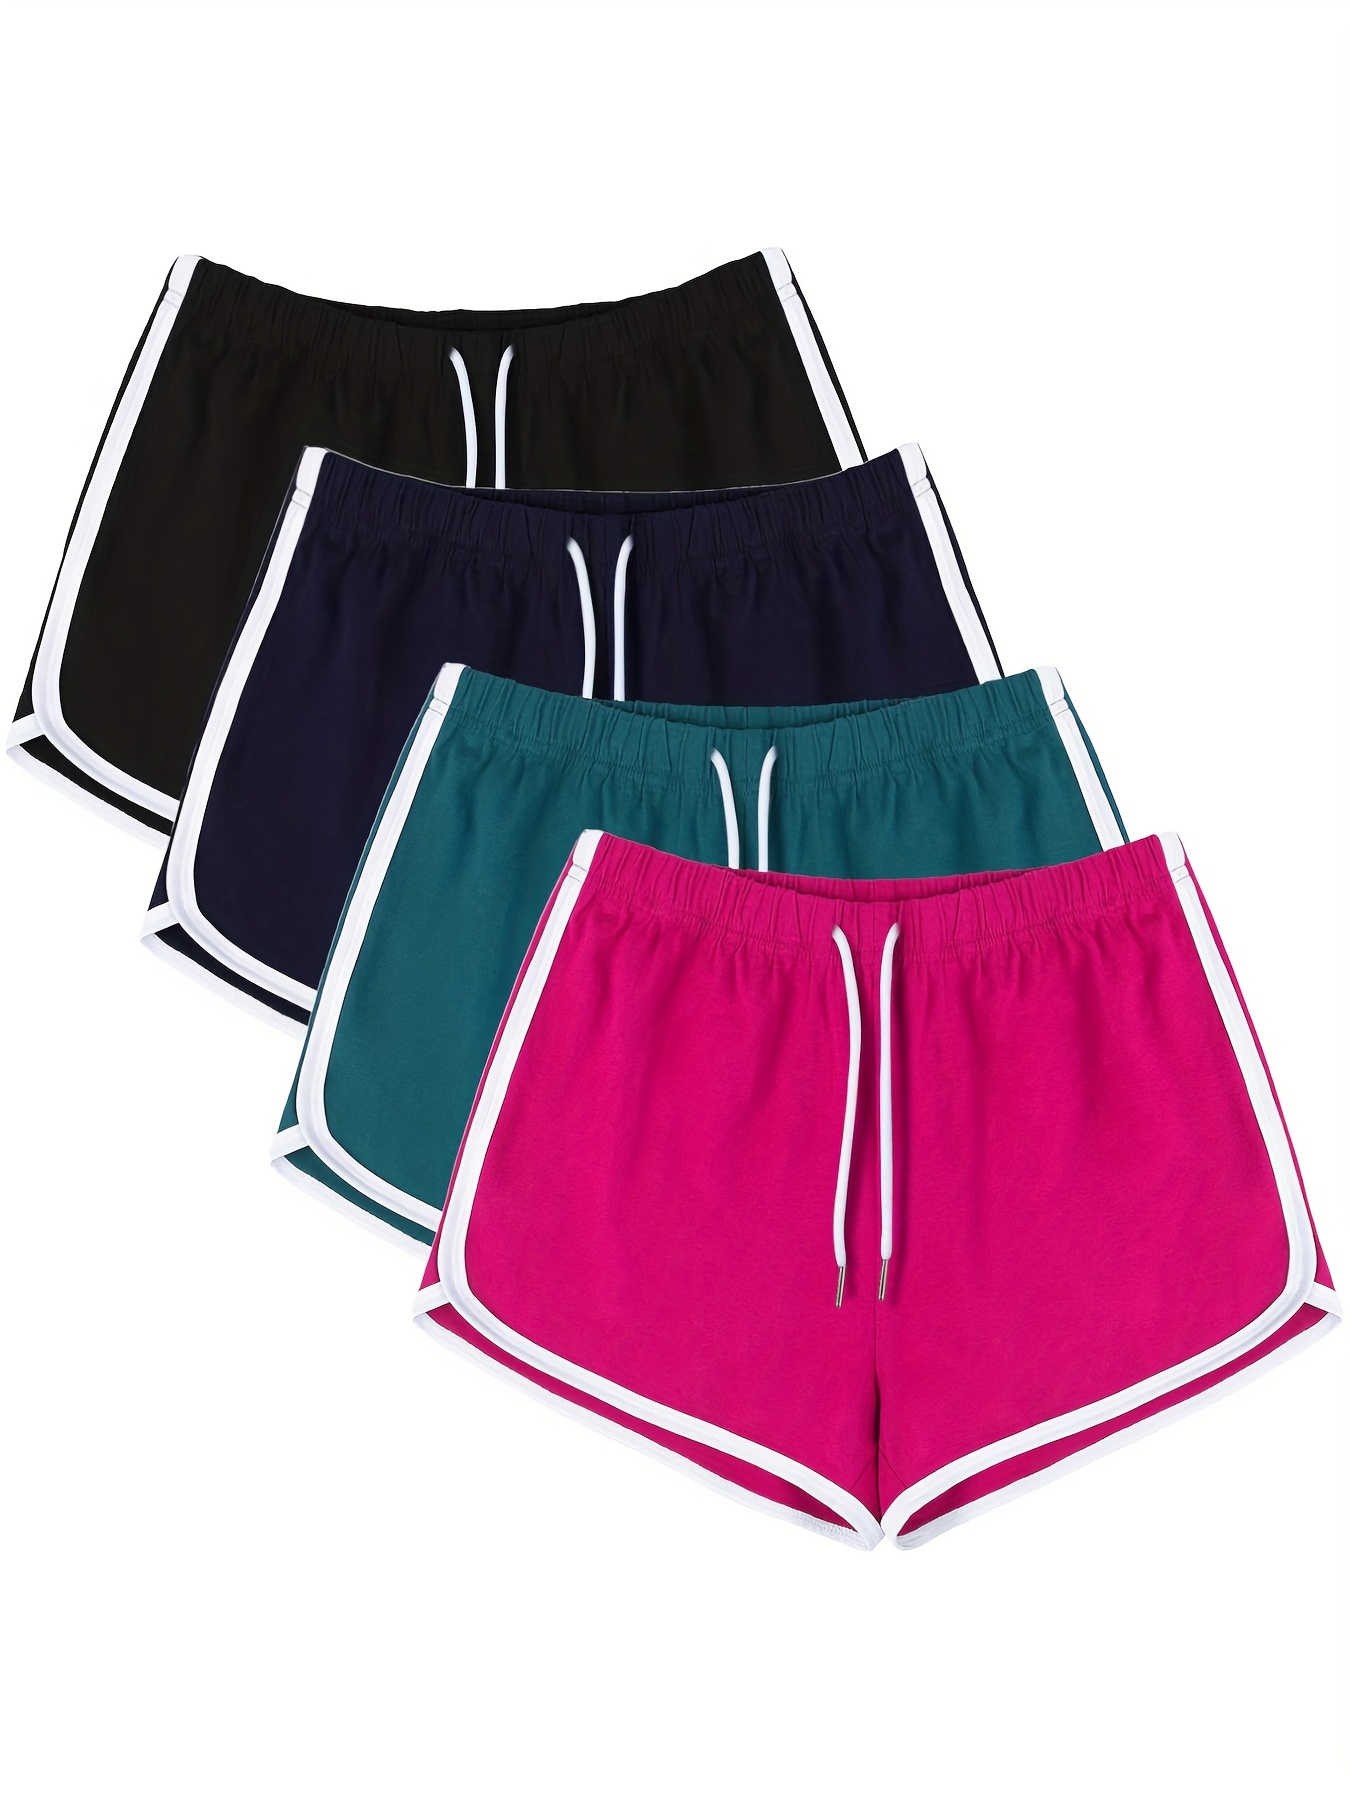 ELEG & STILANCE Women Gym Yoga Seamless Pants|Boyshorts Yoga Shorts Sports  Clothes Stretchy Mid Waist Athletic Exercise Fitness , Size(32), (Cotton)